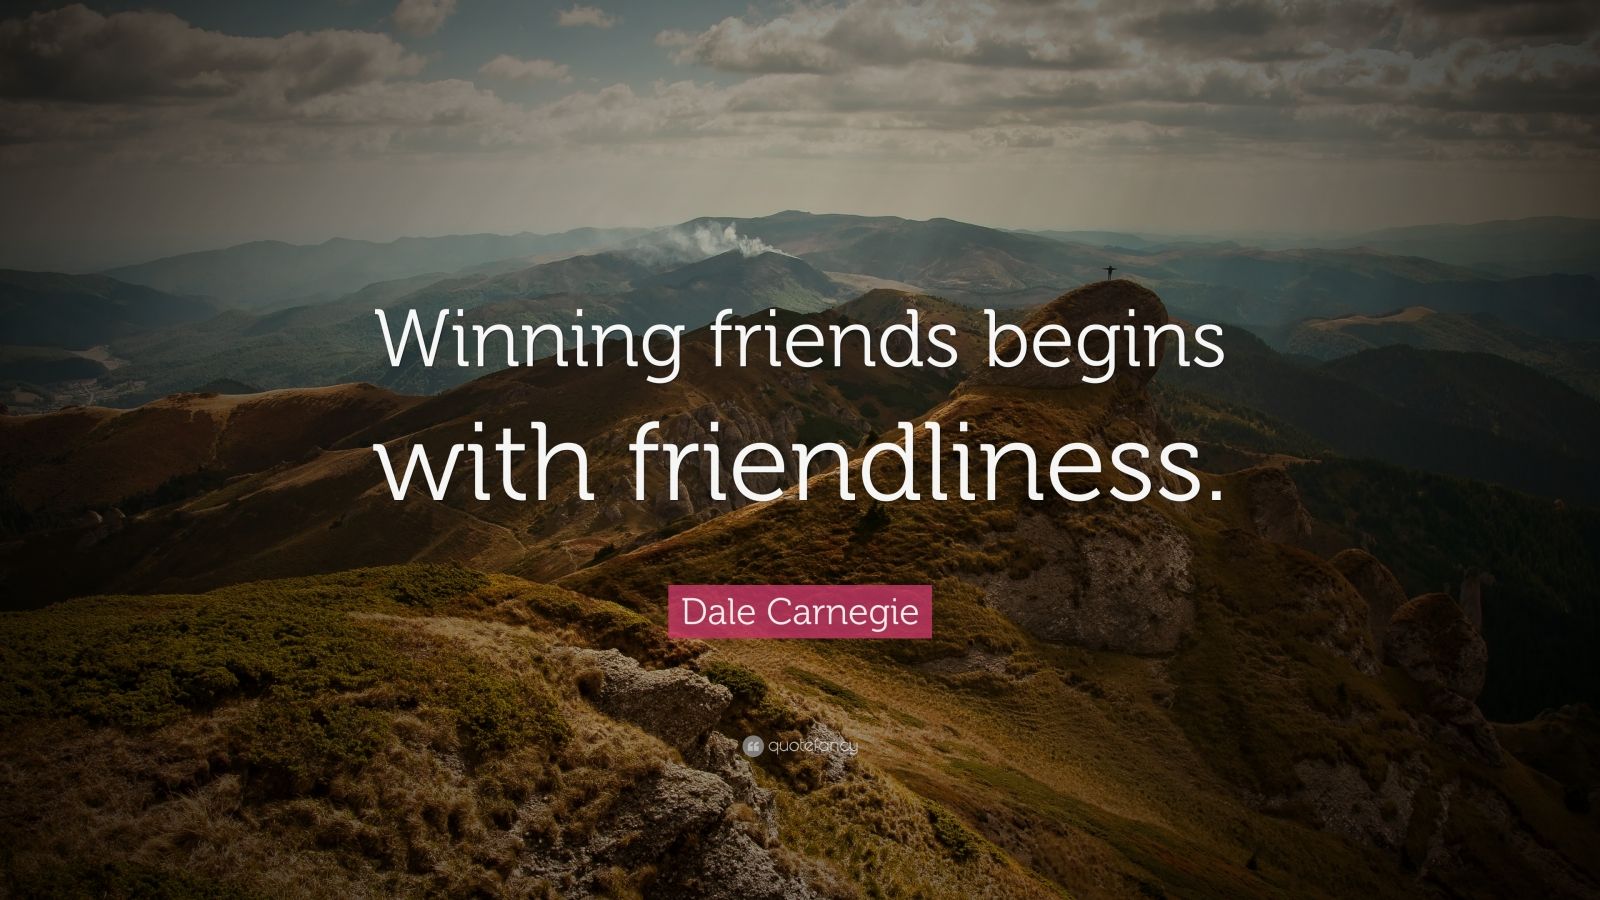 dale carnegie how to win friends